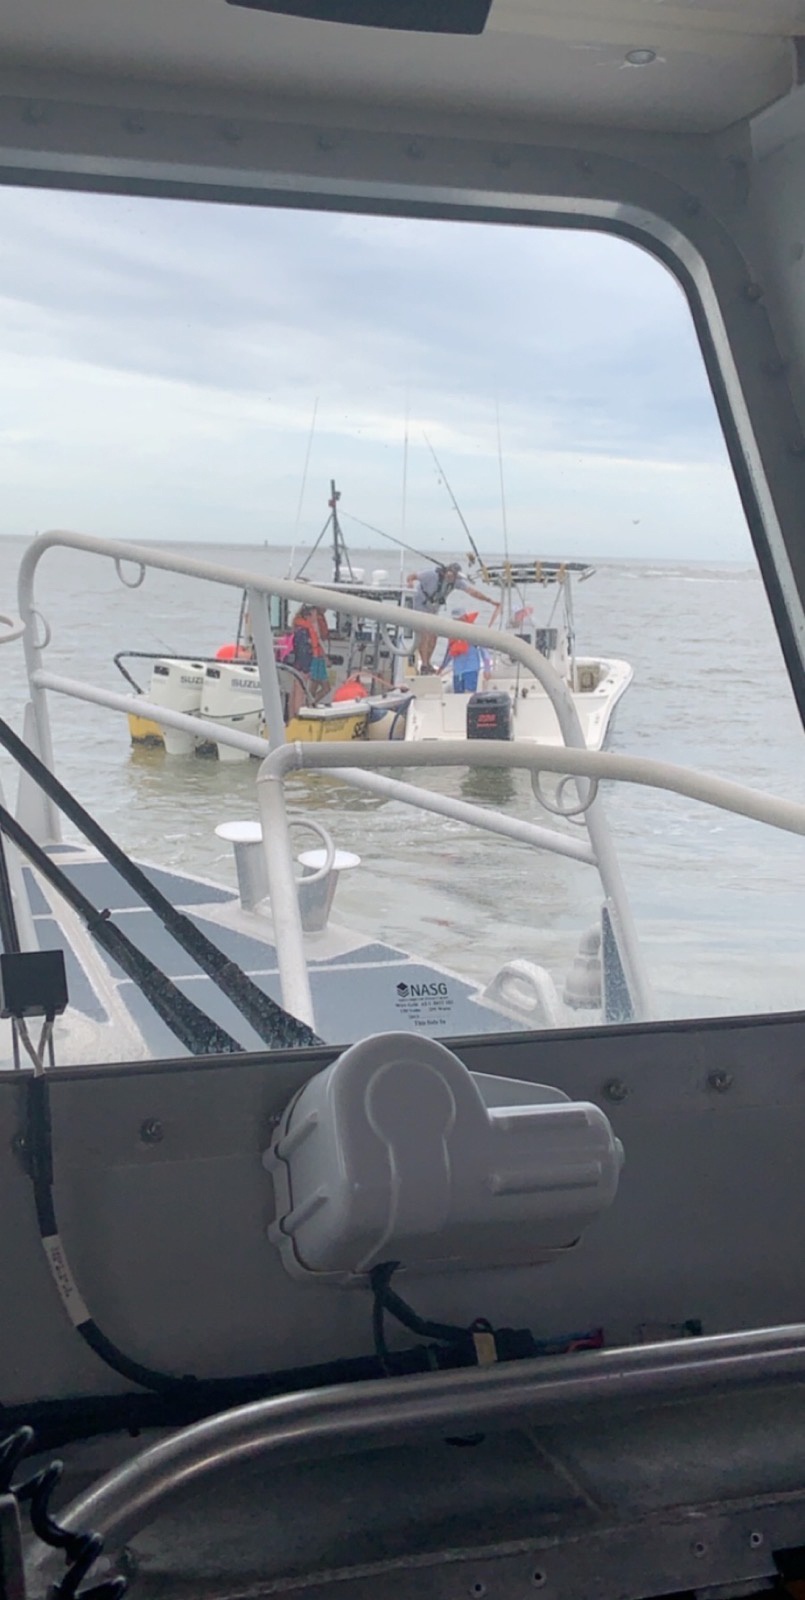 Coast Guard assists vessel taking on water 8 miles southeast of Tybee Island